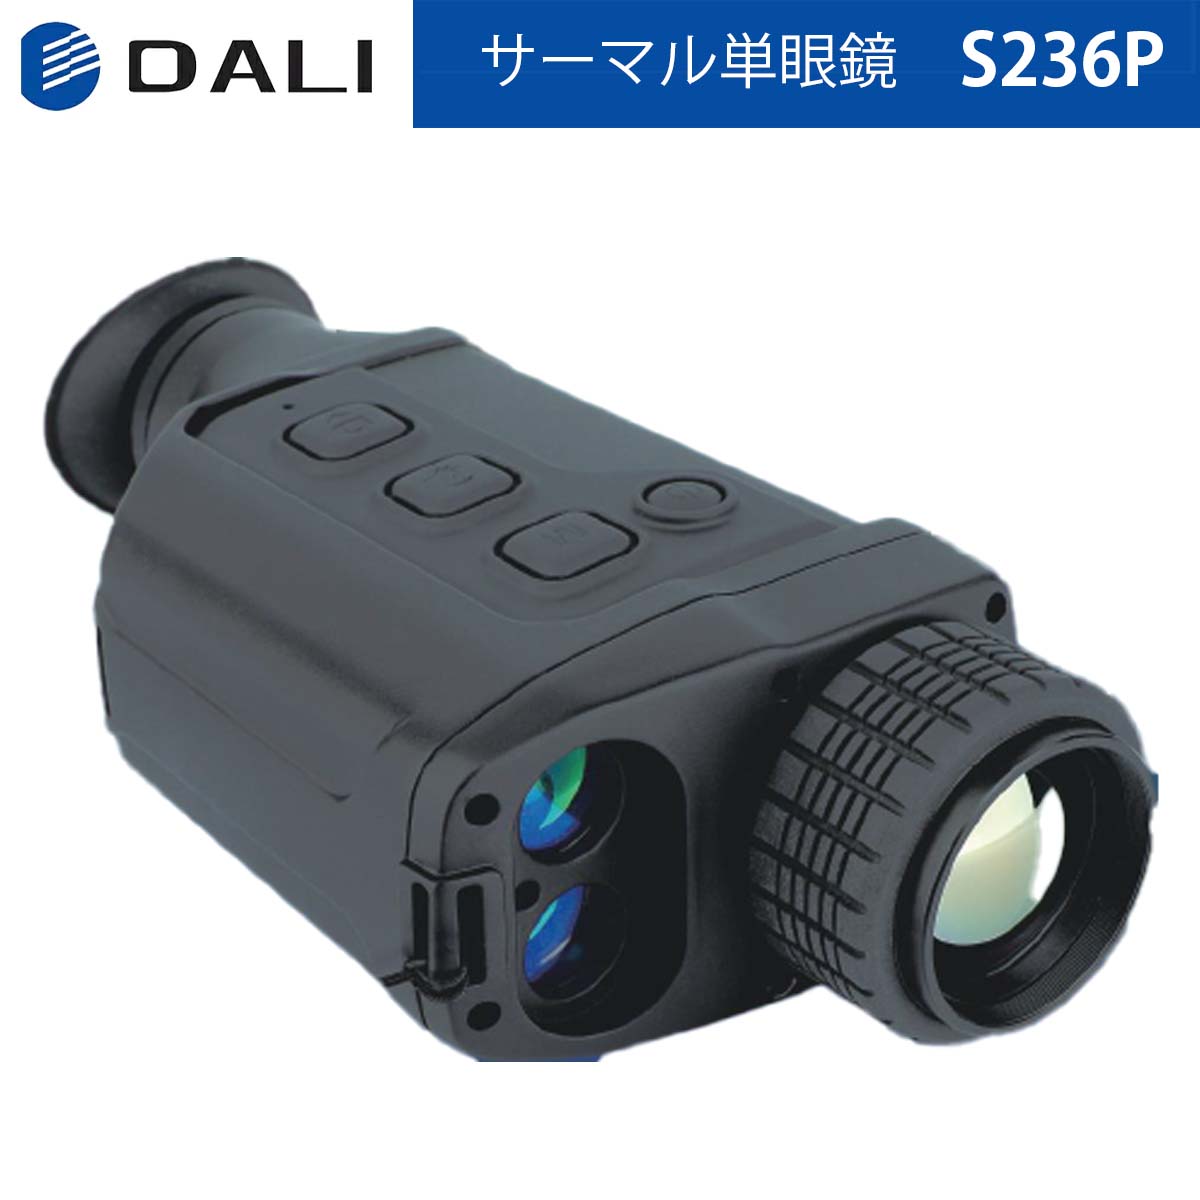 DALI【メーカー正規品】サーマル単眼鏡 S236P 1280×960大画面 観察モード 距離計装備 WIFIライブ画像